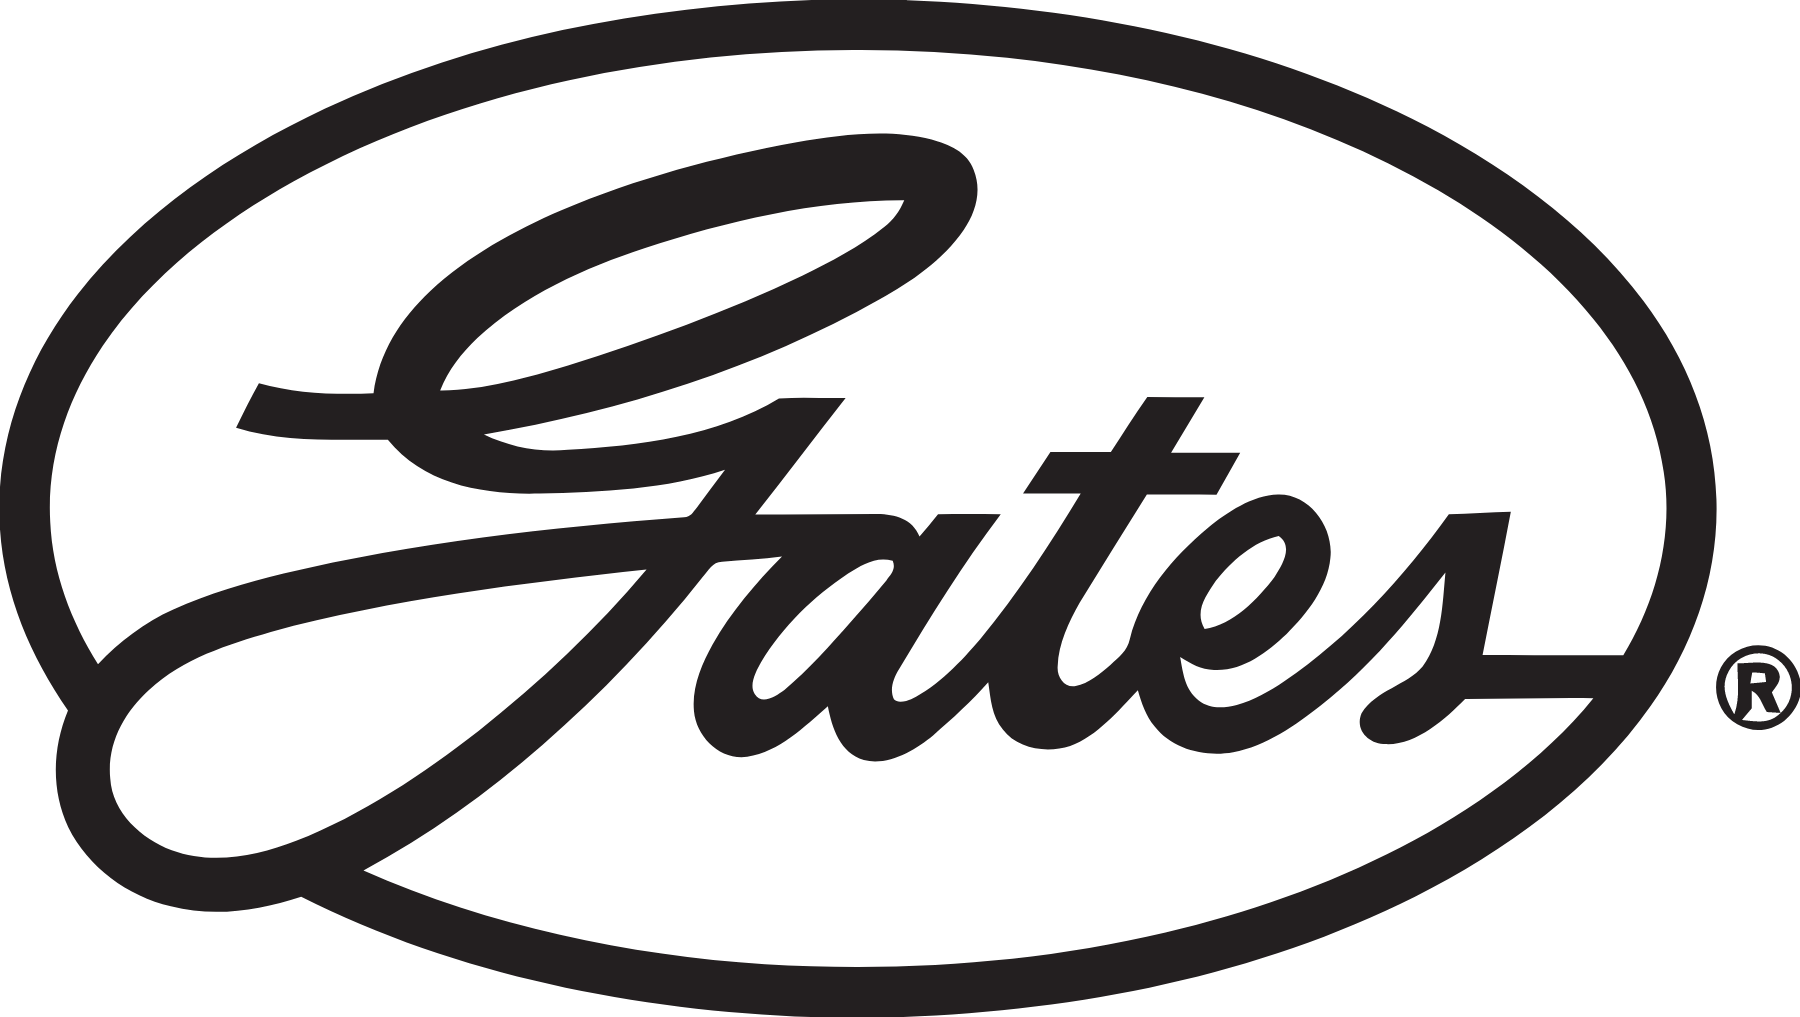 Gates Industrial Corp logo large (transparent PNG)